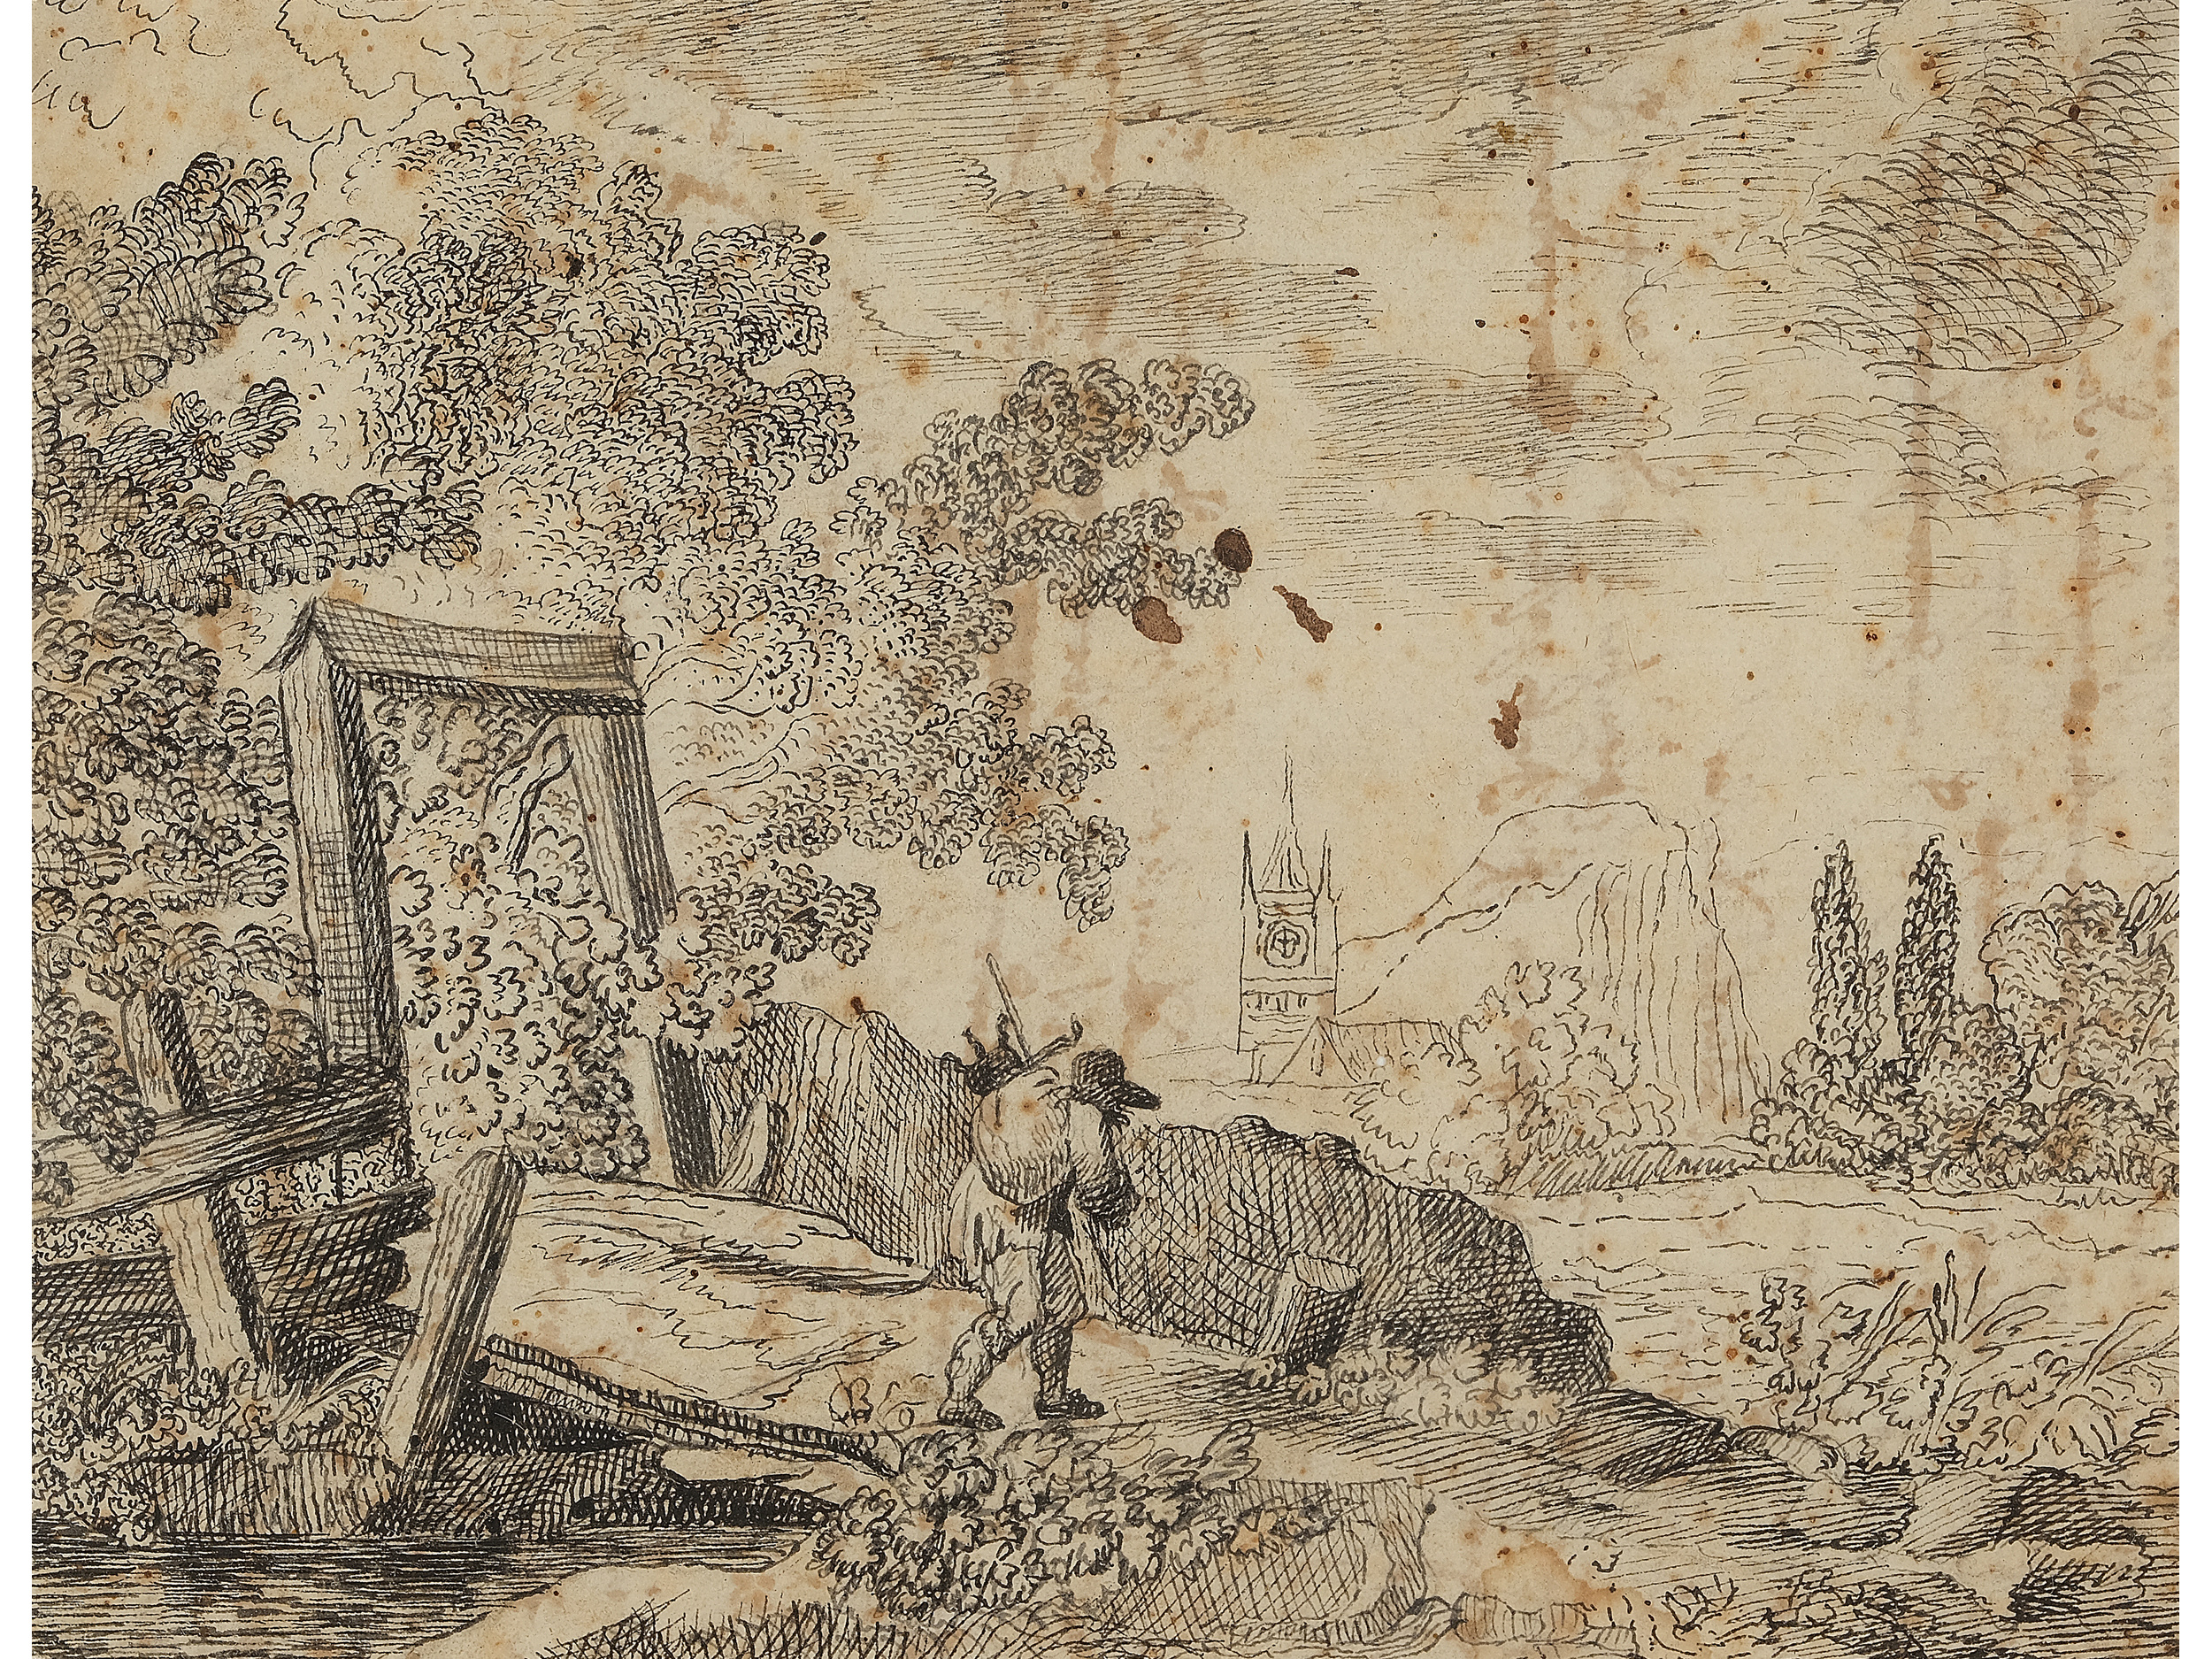 Flemish Master, Landscape, Beginning of 17th century